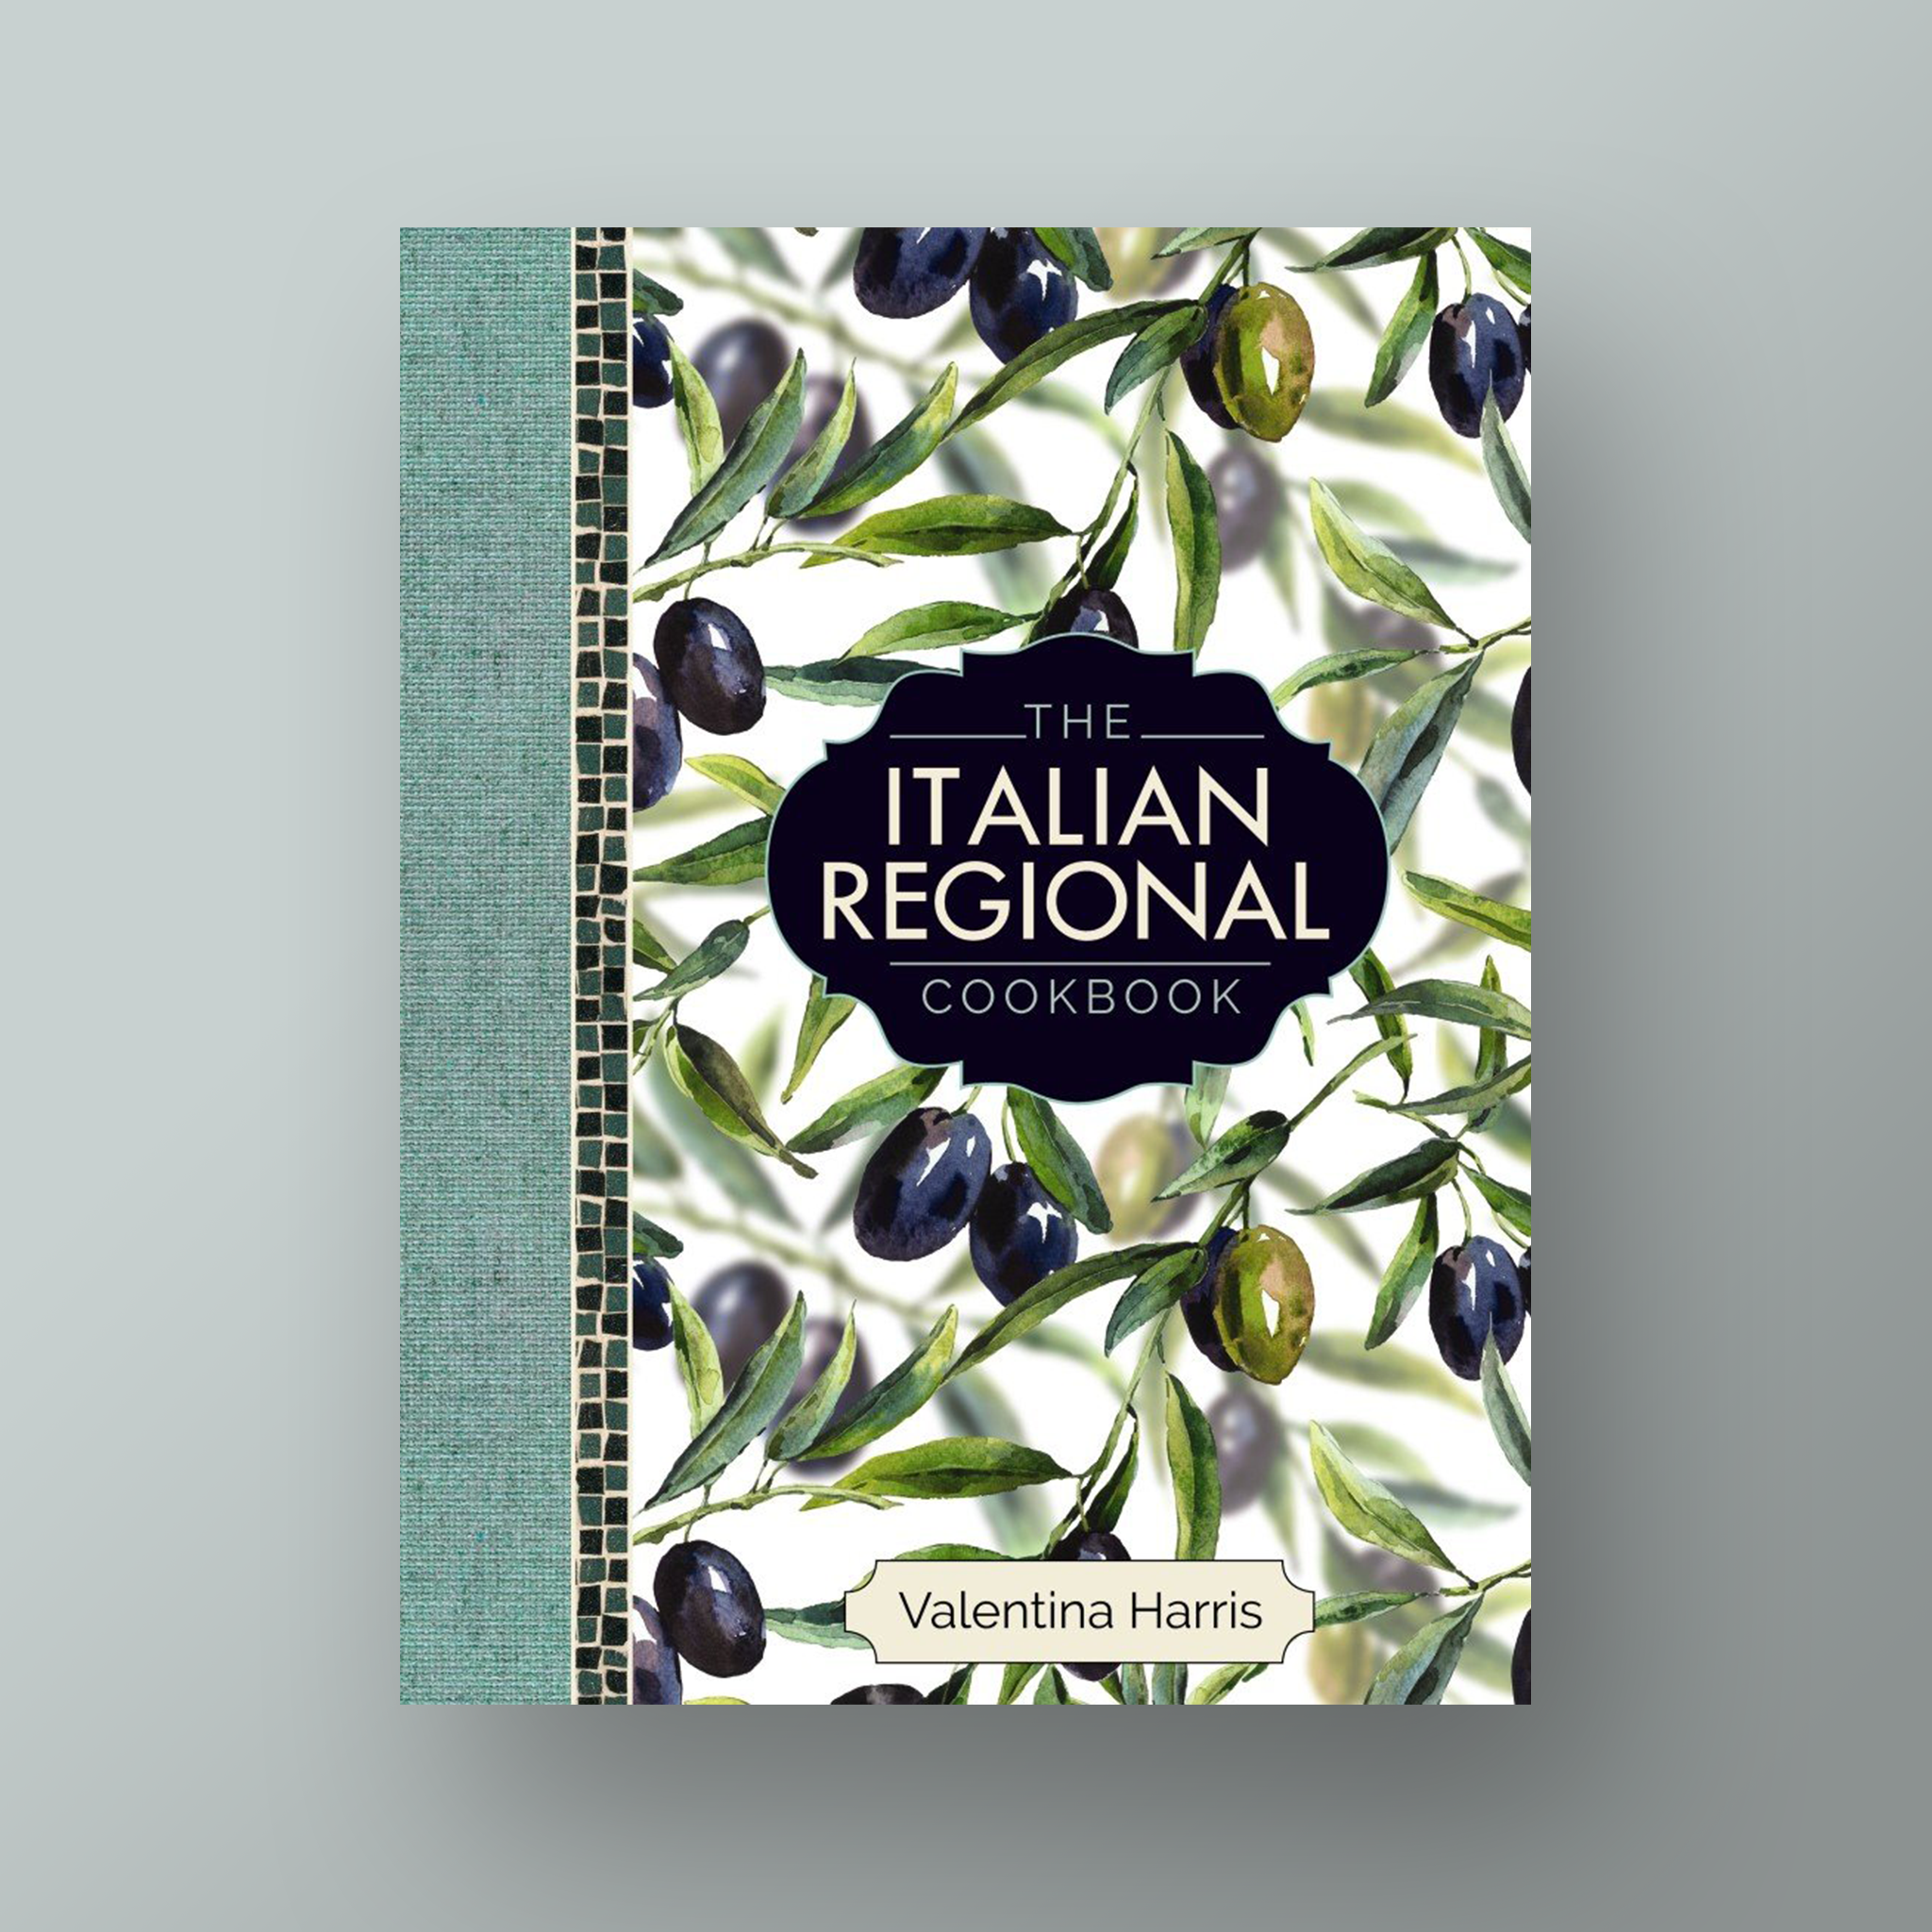 The Italian Regional Cookbook cover